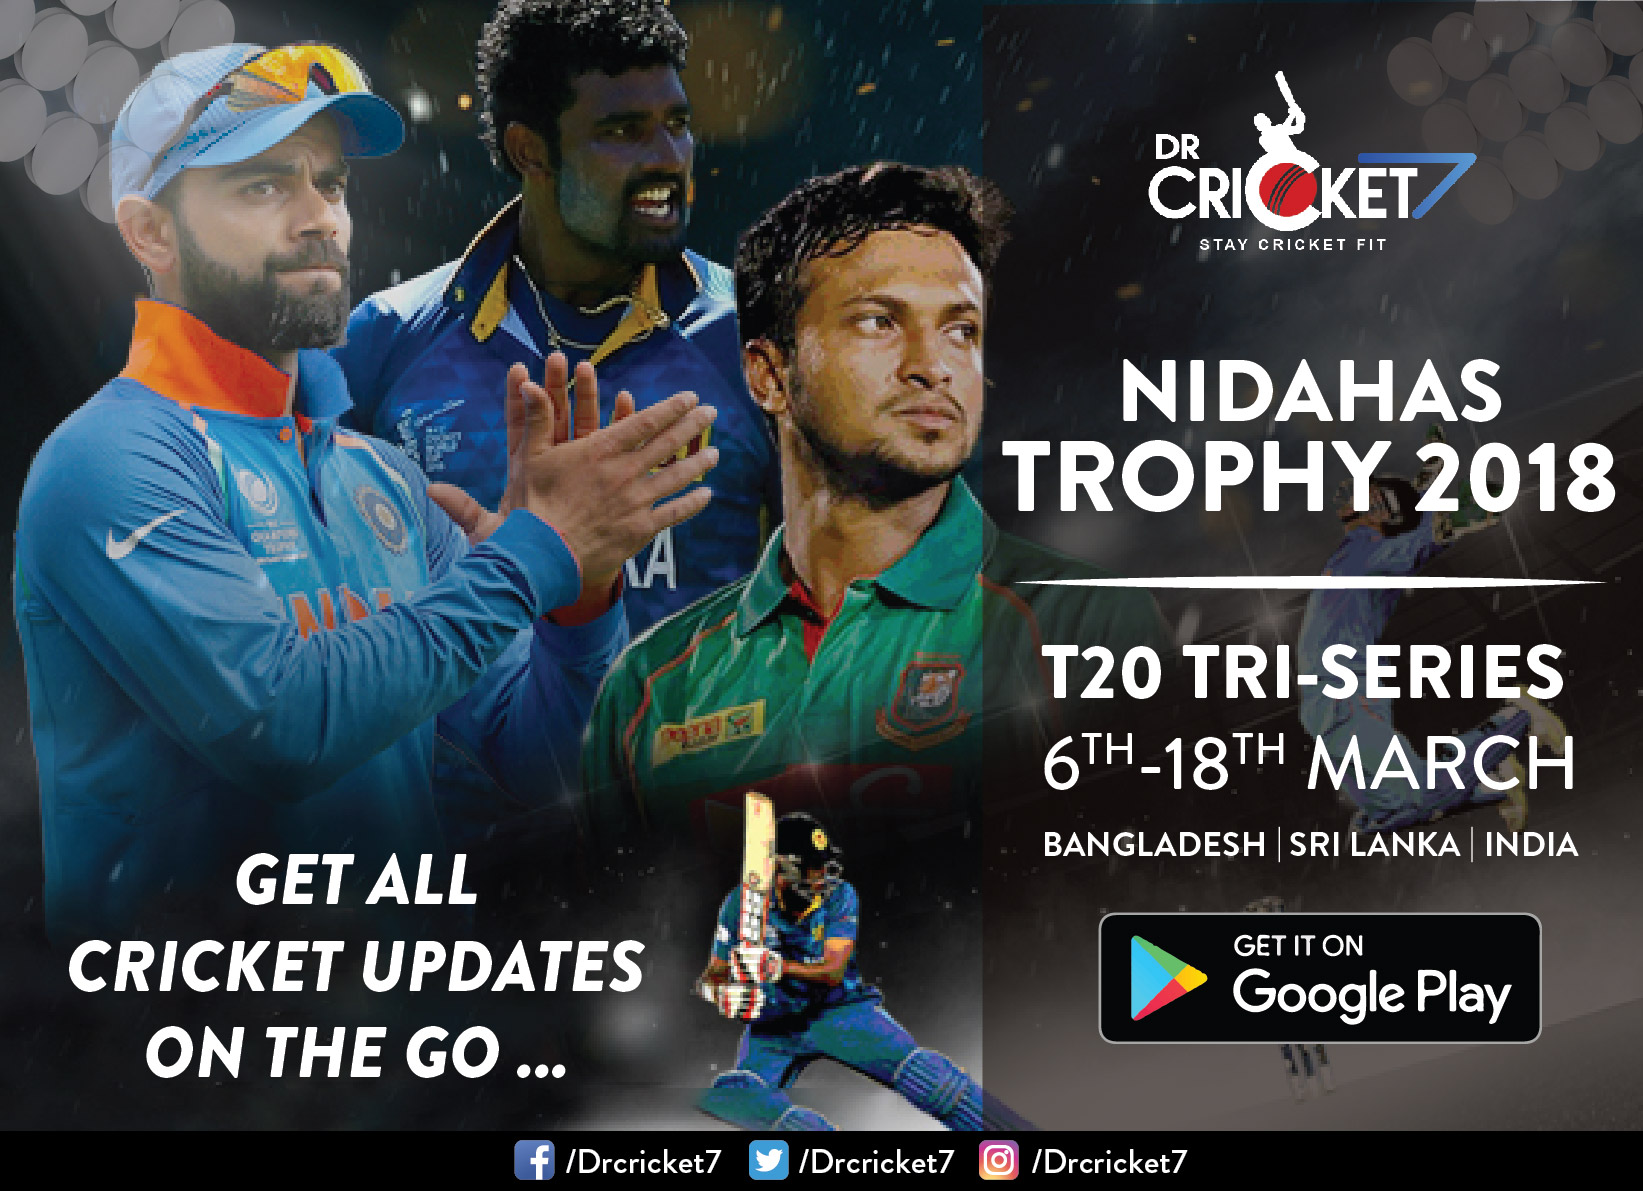 Team India for Nidahas Trophy 2018 announced